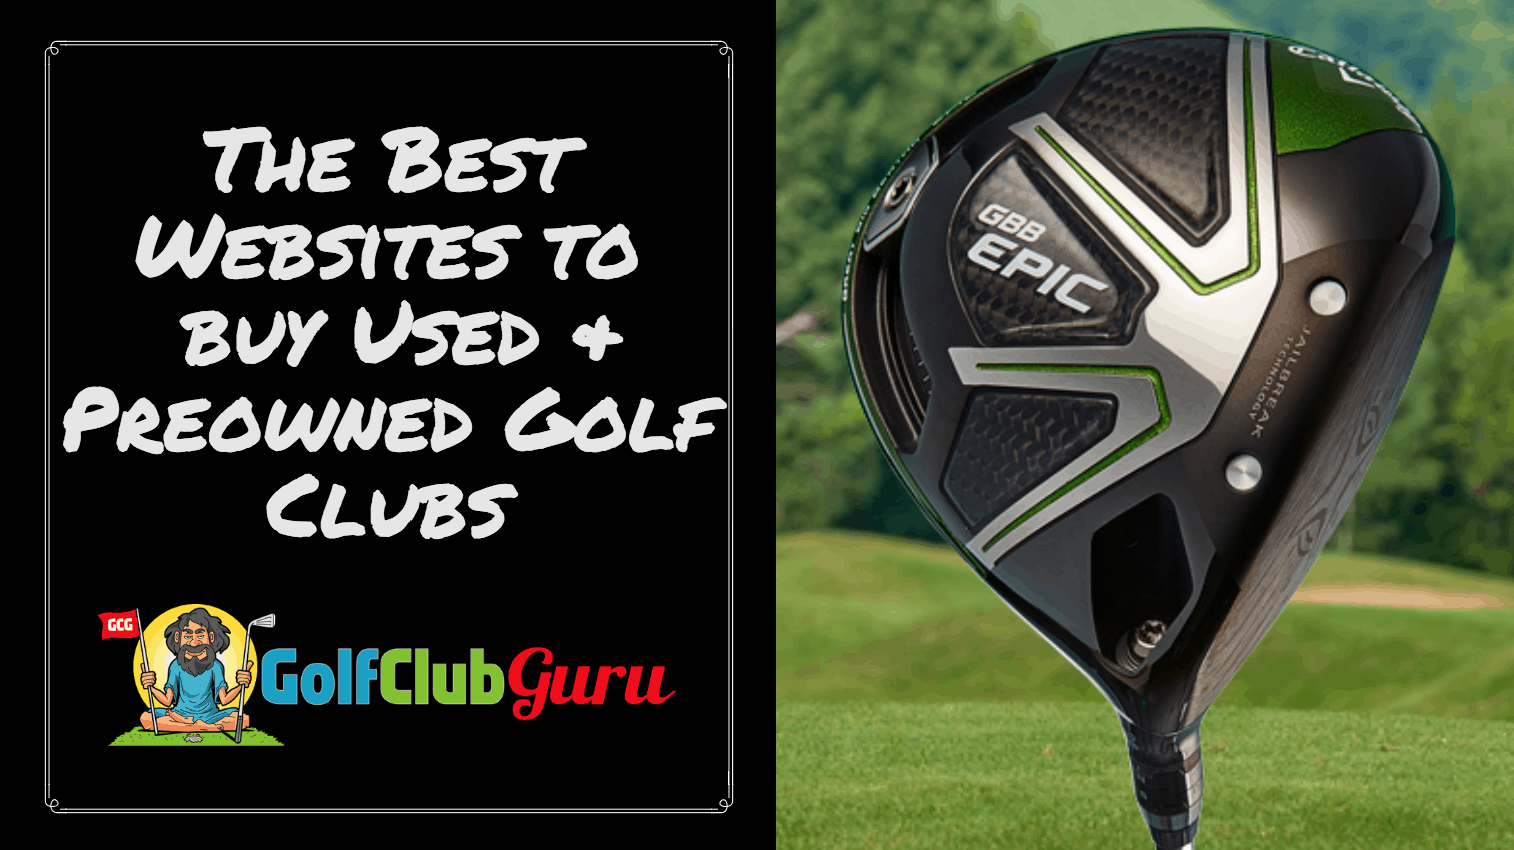 buy used golf clubs website site | Golf Club Guru